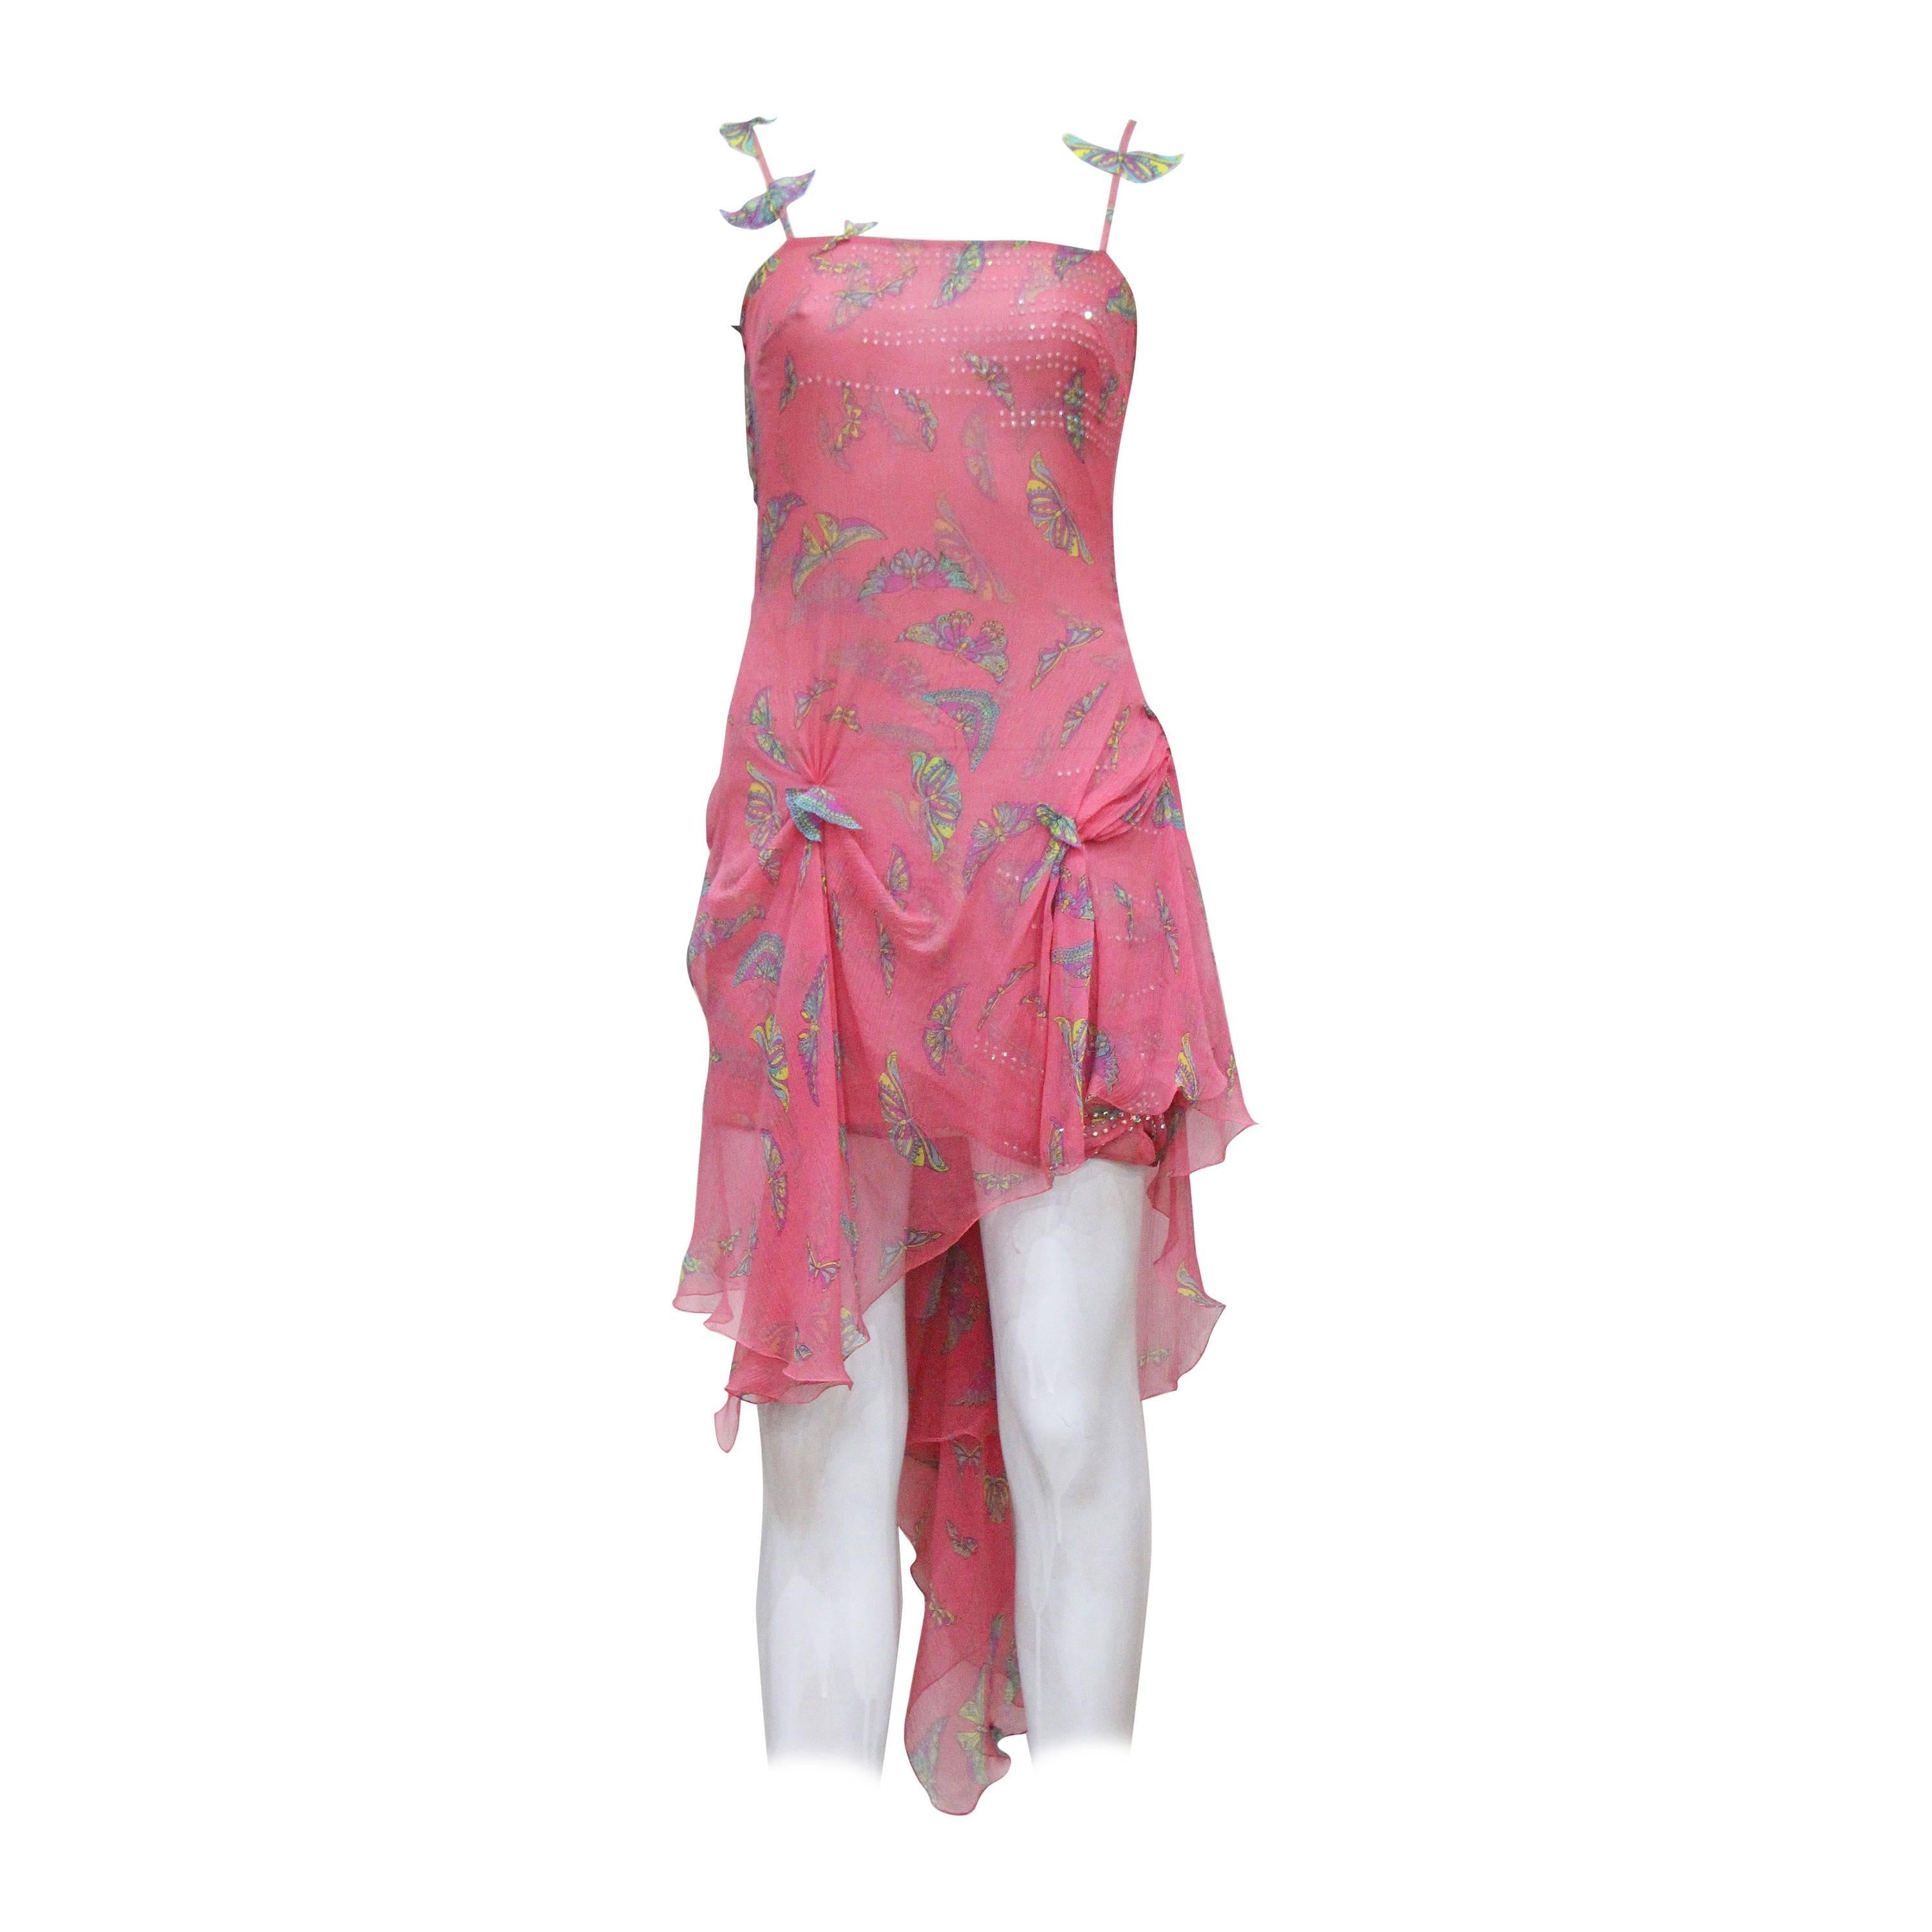 Gianni Versace Butterfly Silk Chiffon Dress, c. 1990s